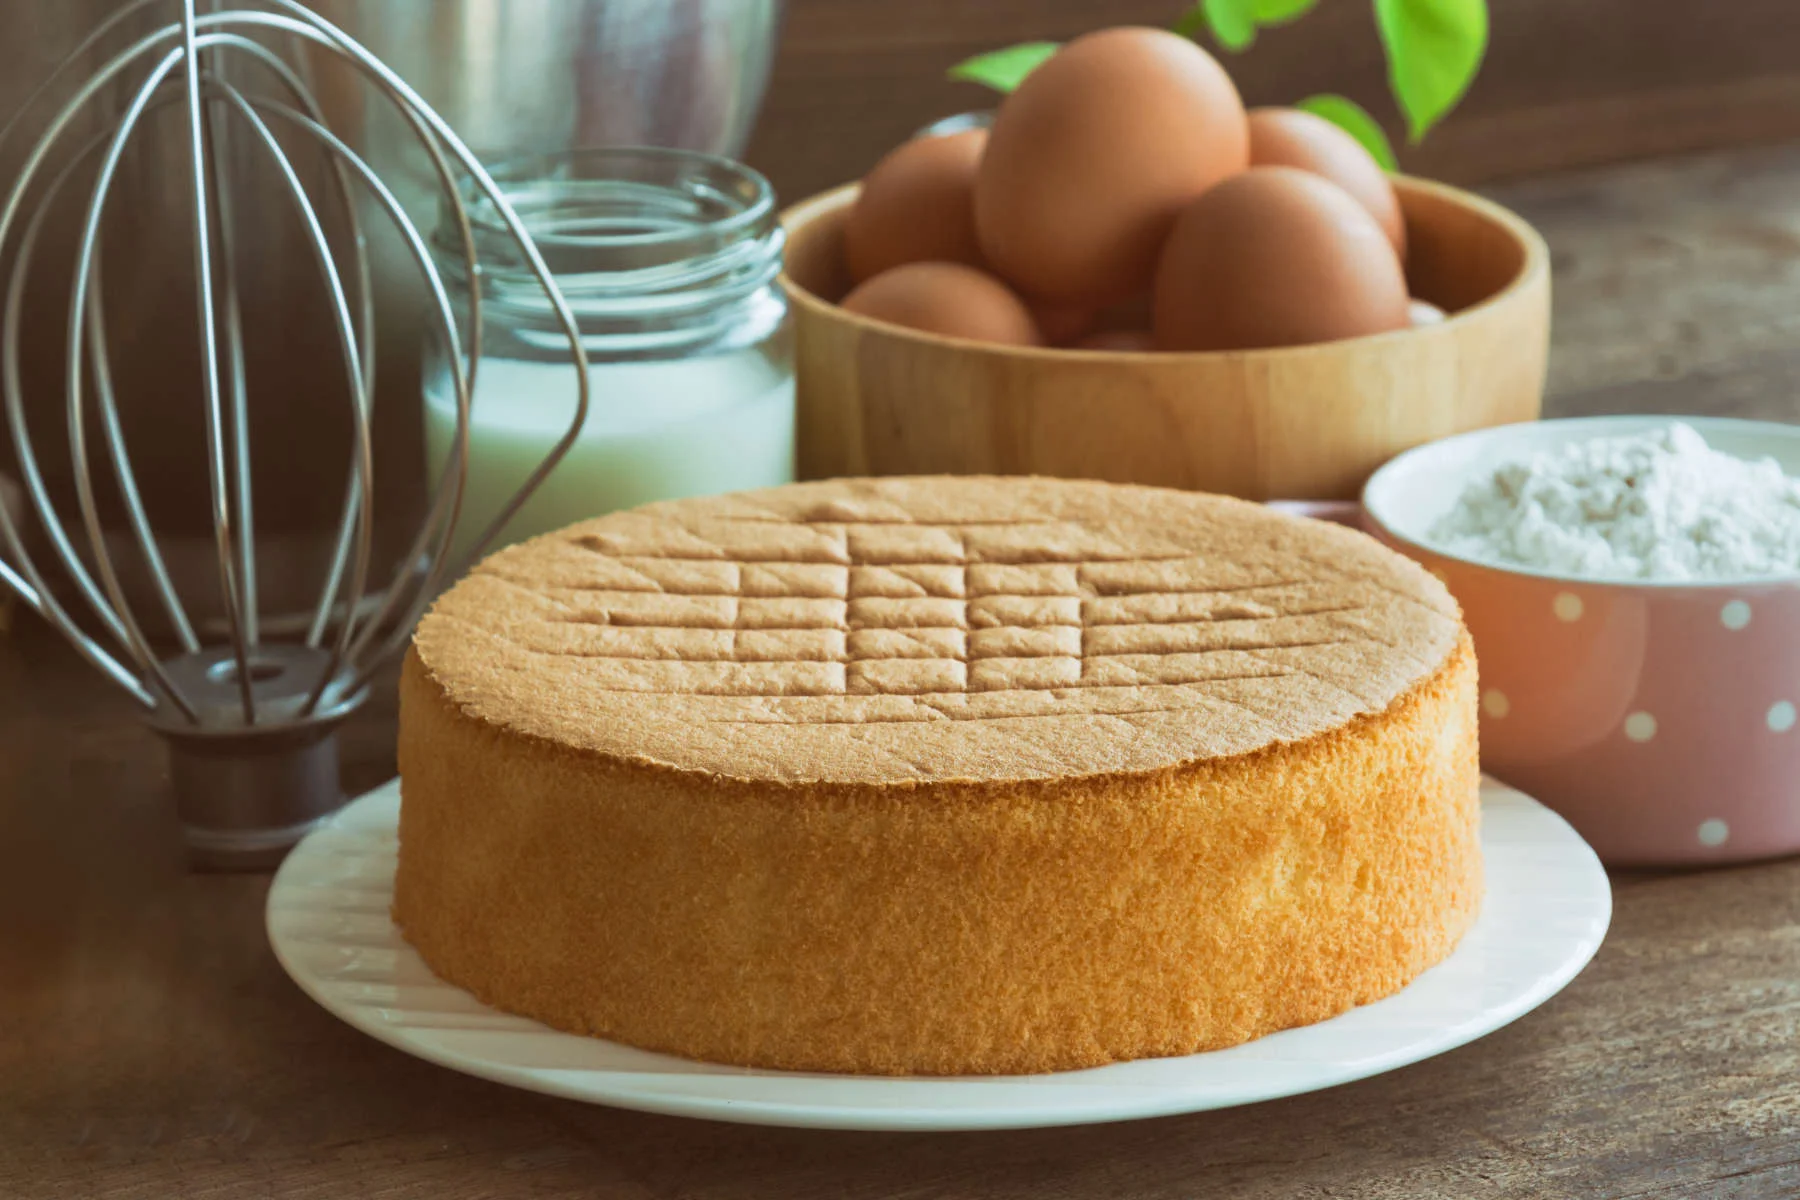 Two easy egg free birthday cake recipes: sponge cake and fruit cake